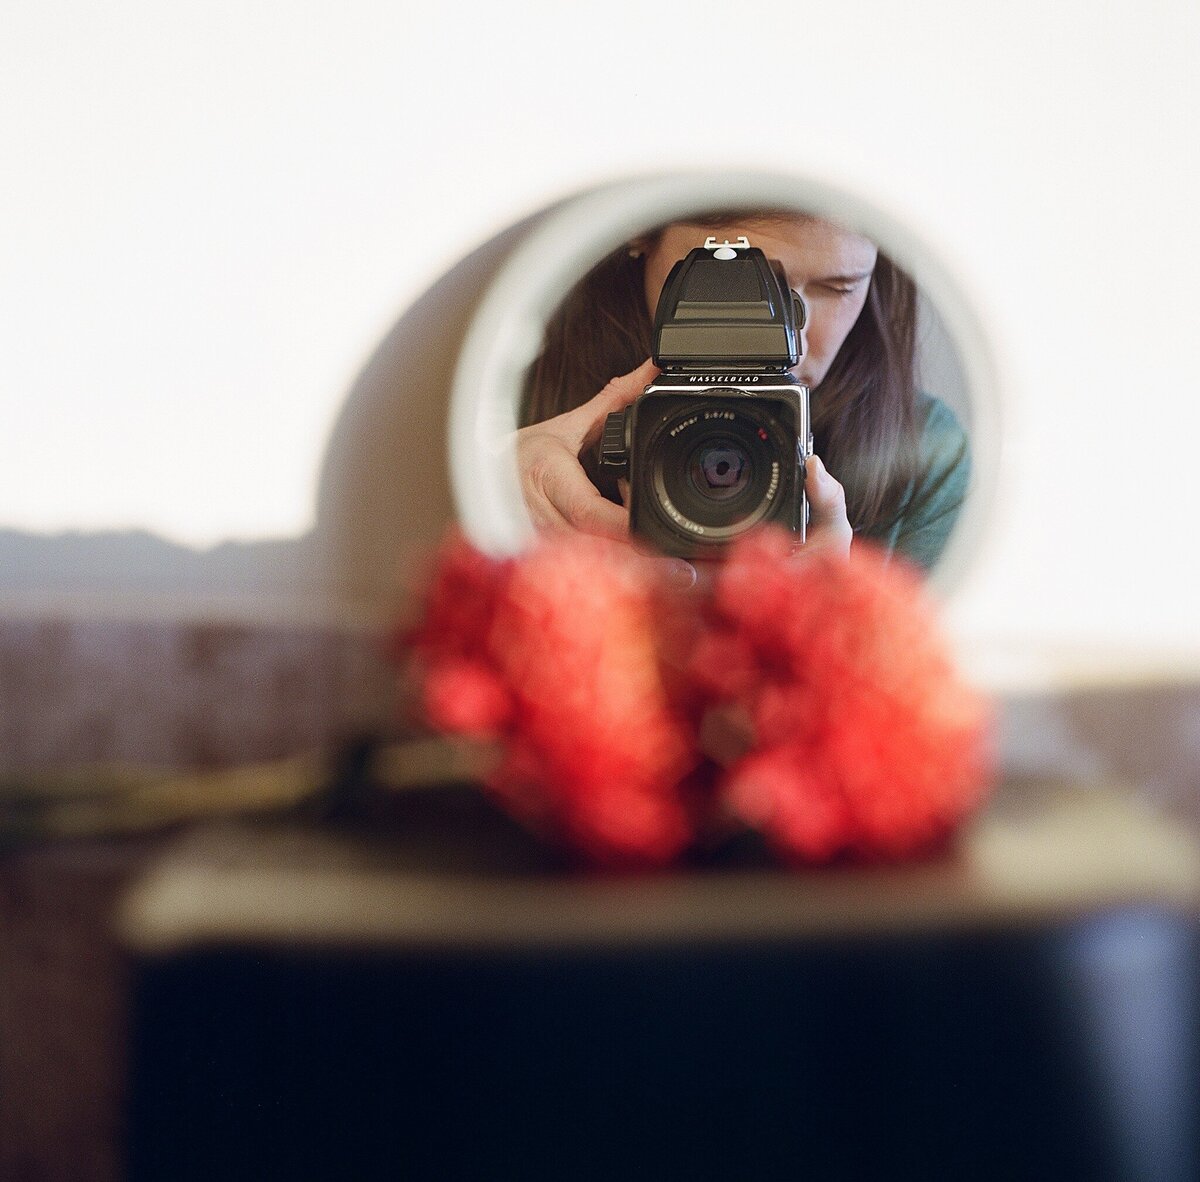 photographer reflection in round mirror holding hassleblad film camera